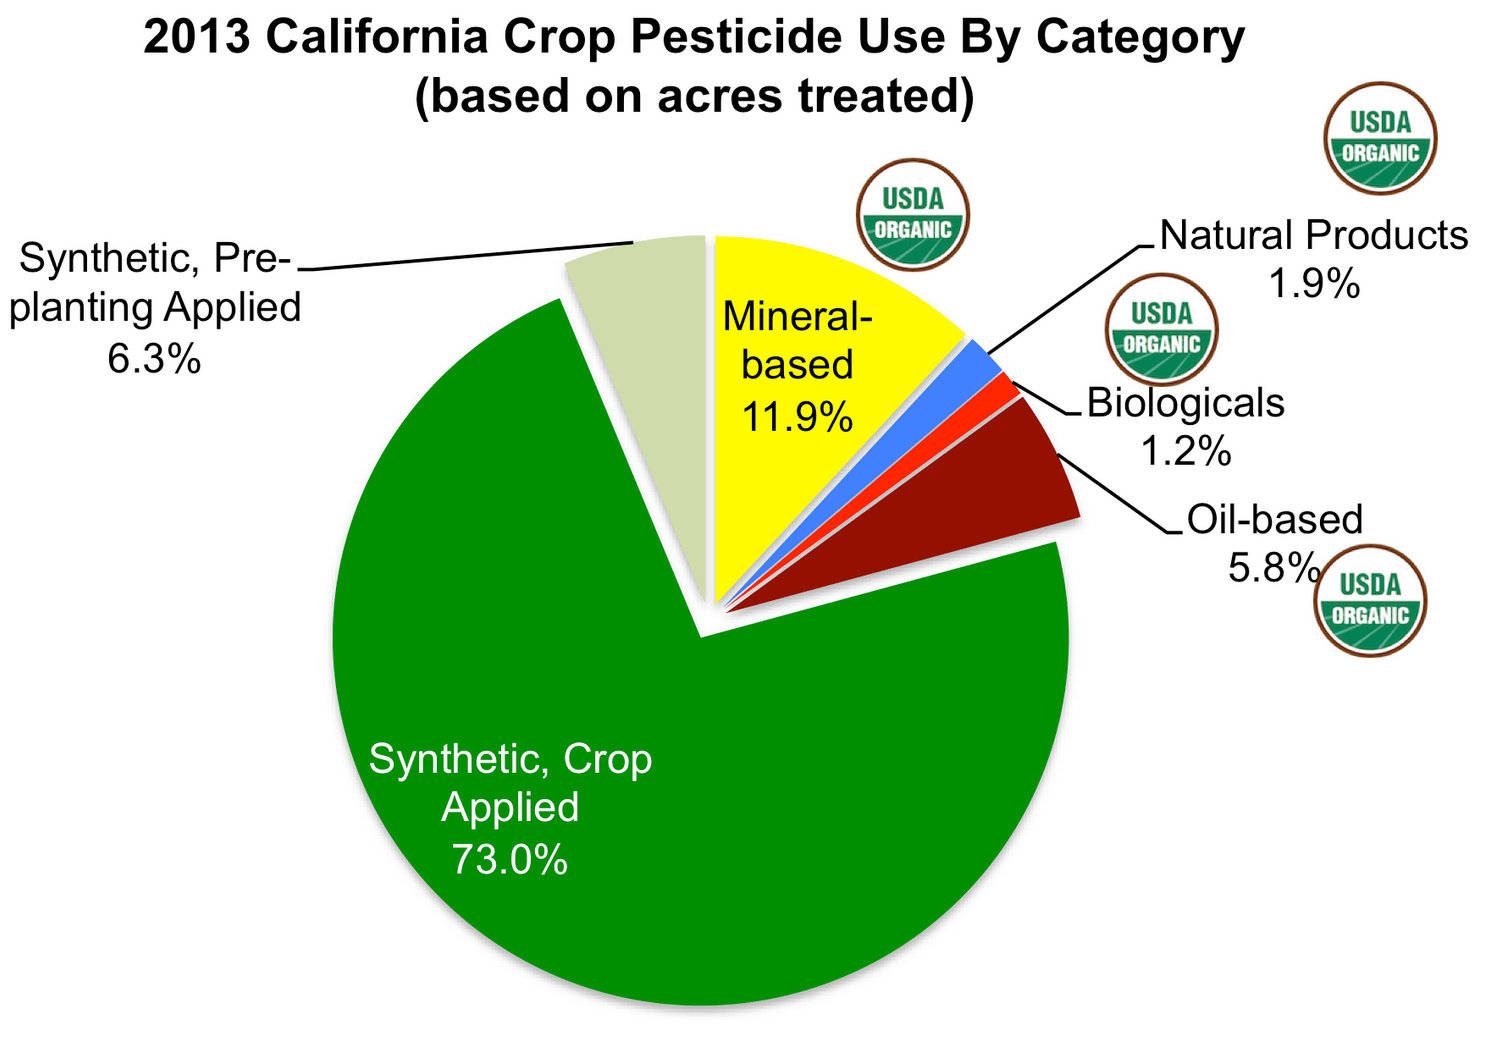 Myth busting on pesticides: Despite demonization, organic farmers widely use them